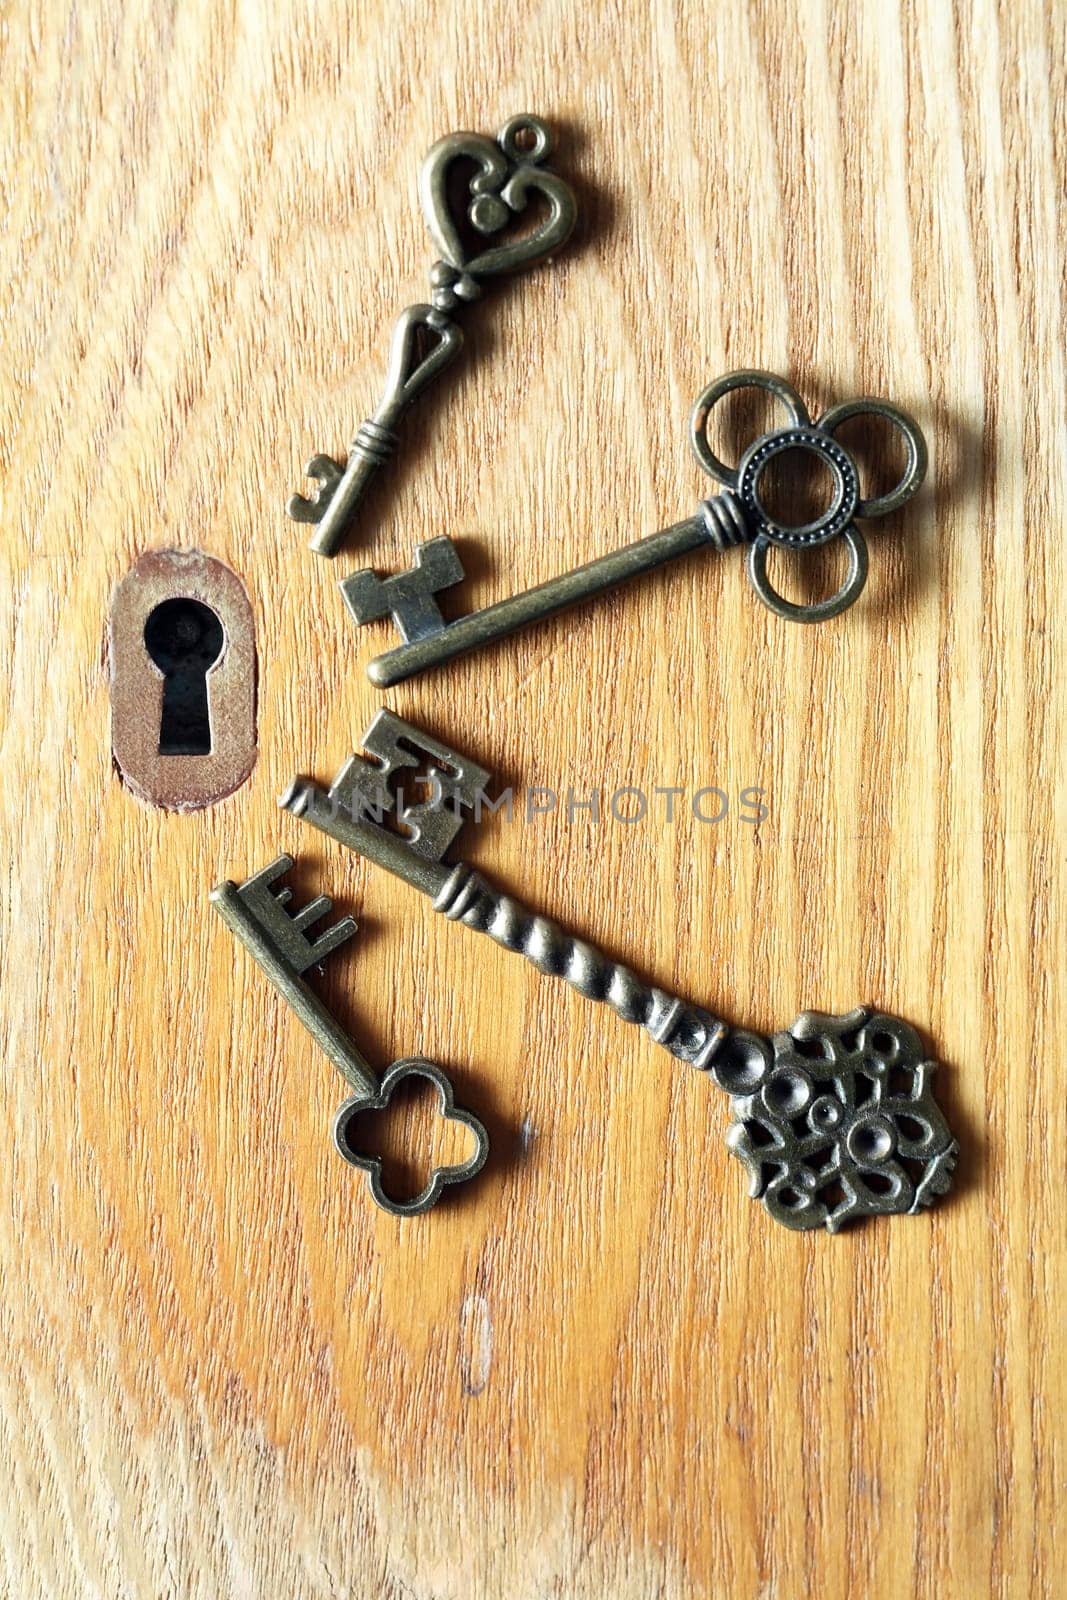 Keyhole With Keys by kvkirillov